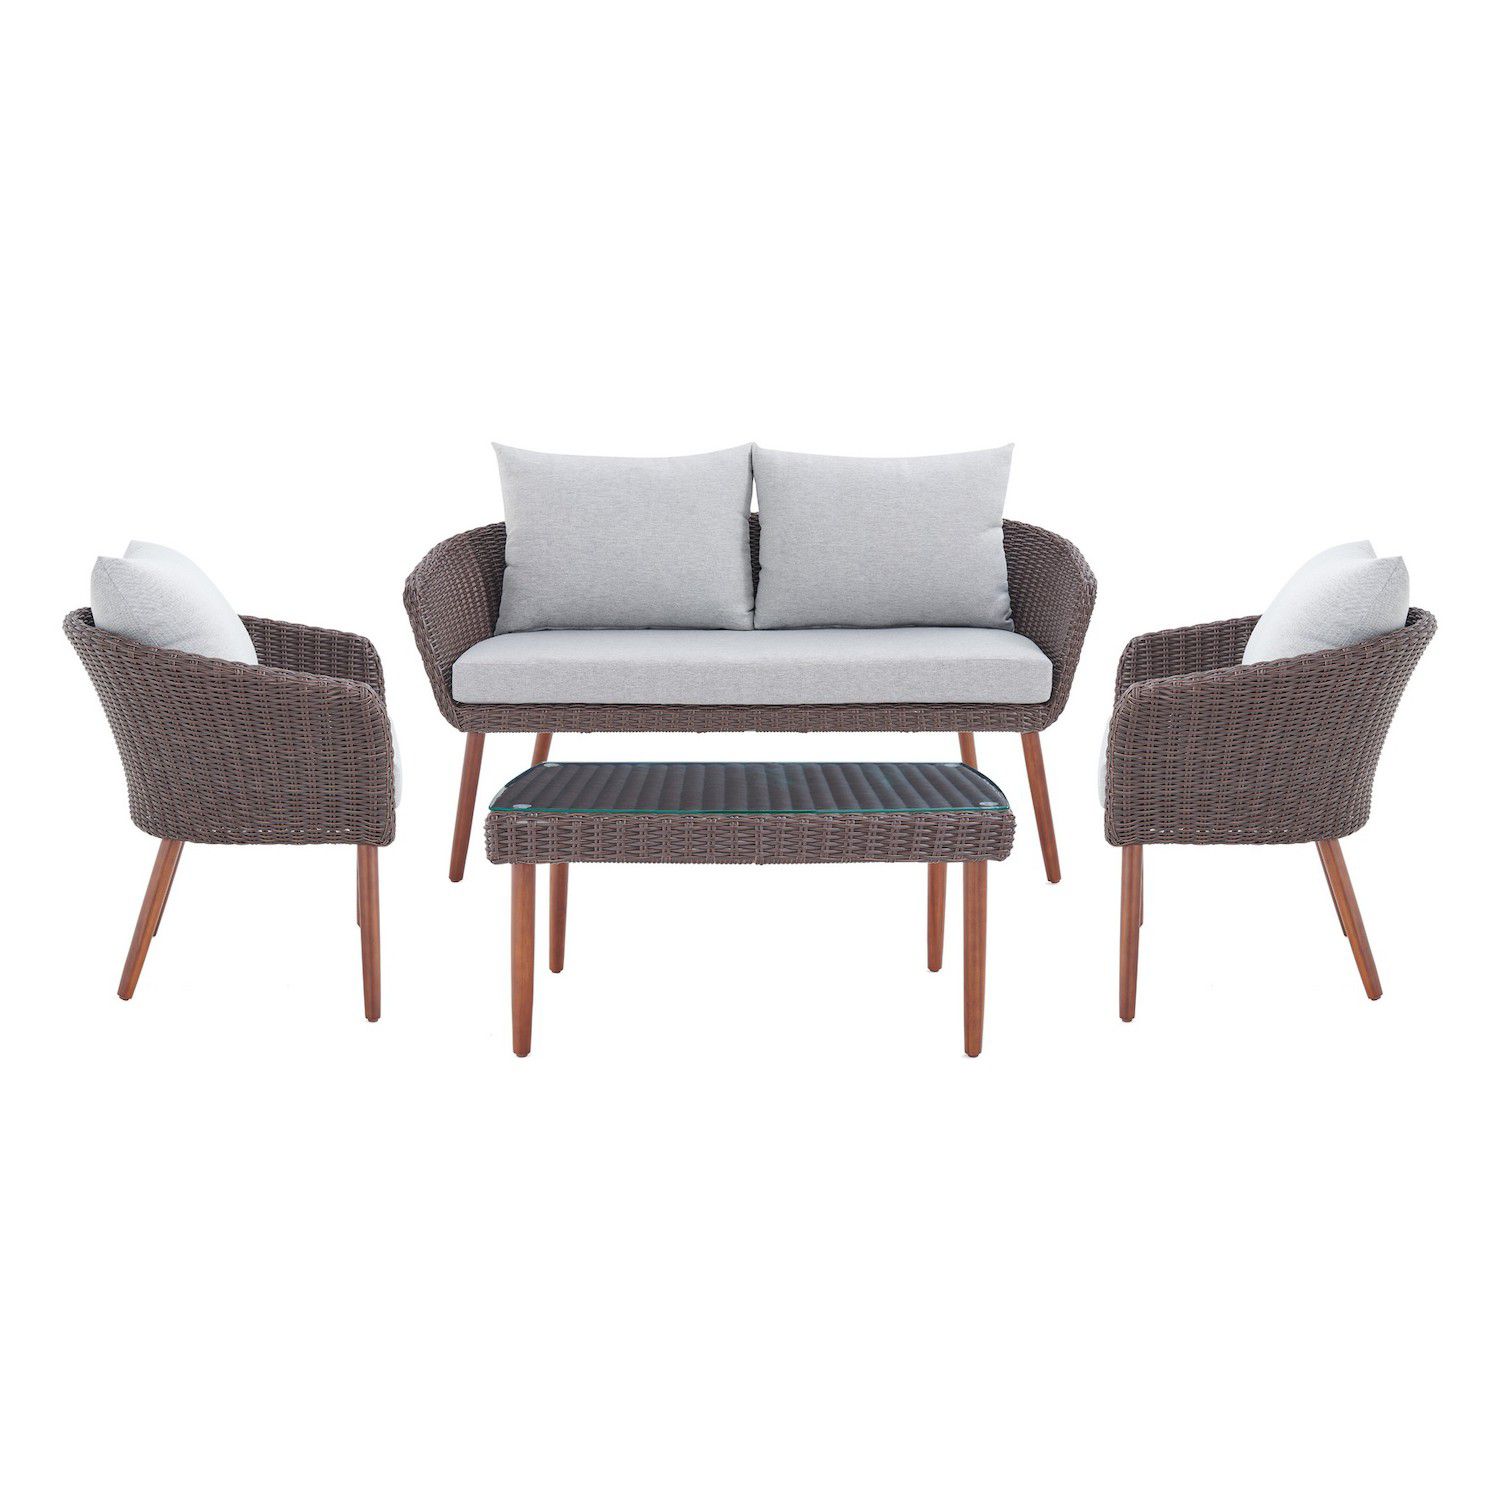 Crosley Furniture Tribeca 4 Piece Outdoor Wicker Seating Set in